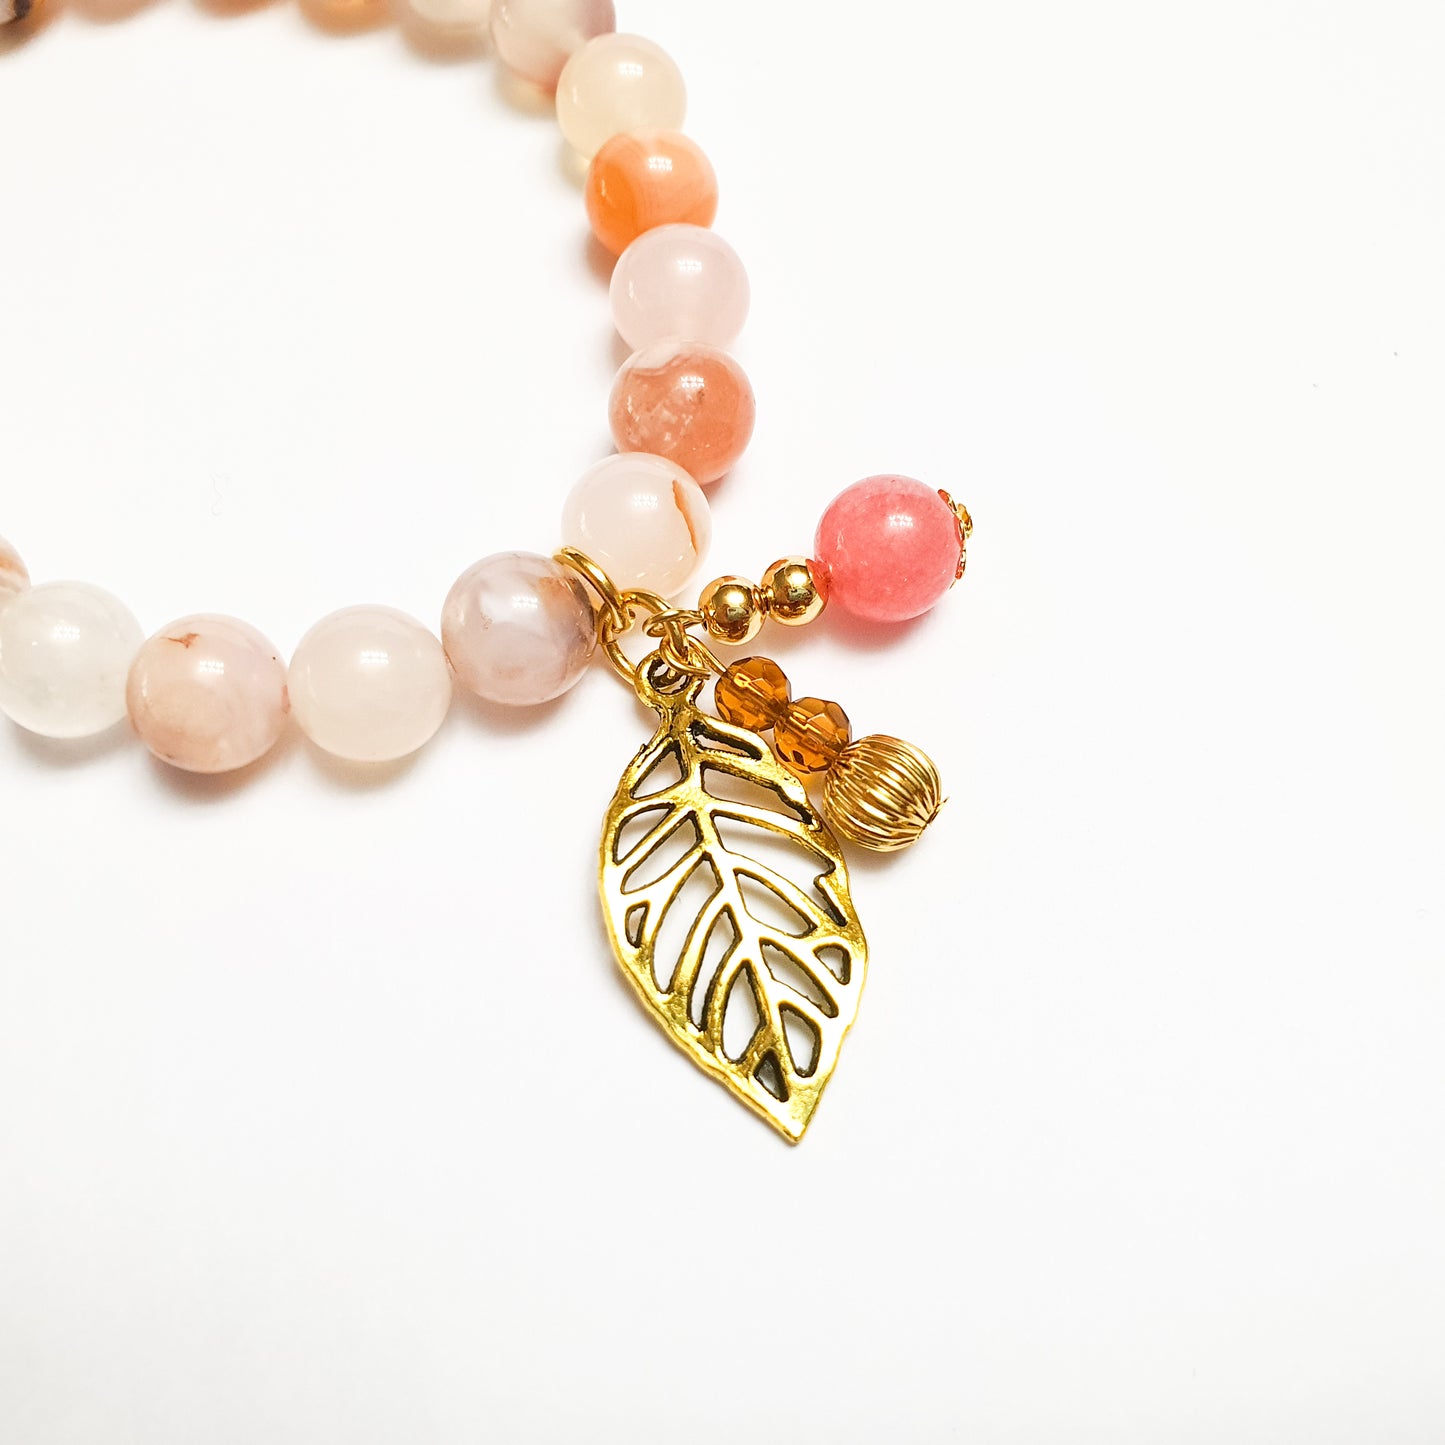 Sakura agate with leaf accent gemstone bracelet - Gems & stones ph